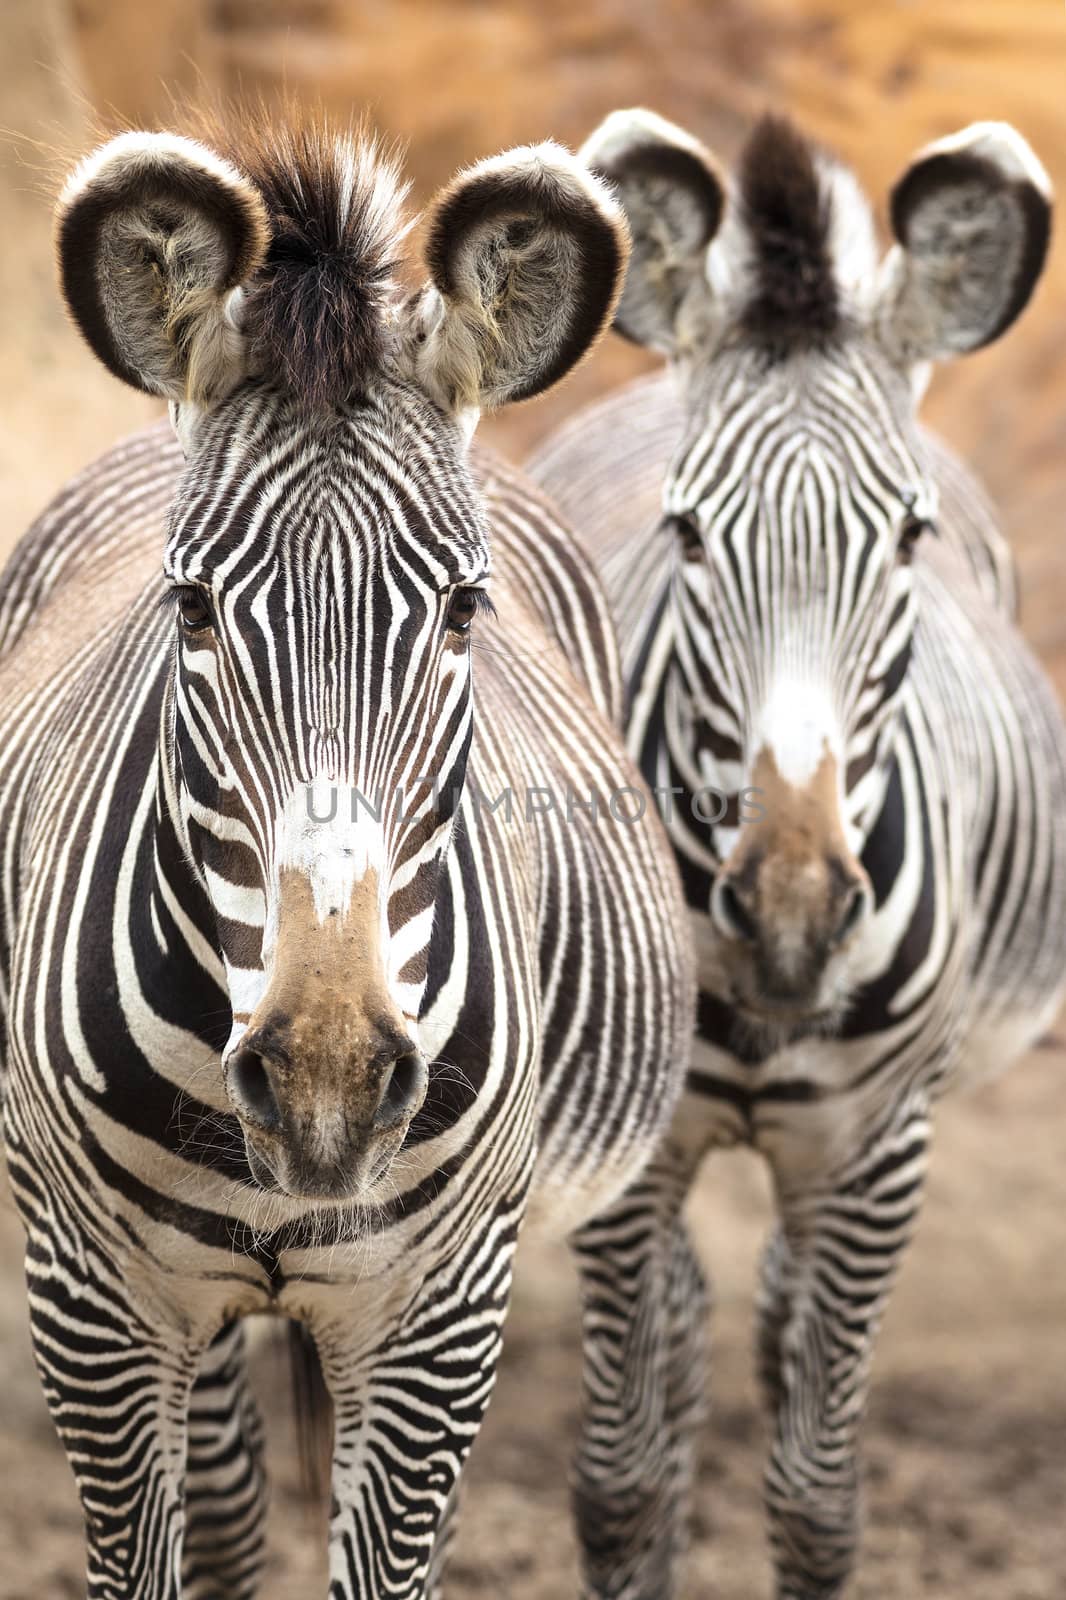 Wild Zebra socialising in Africa 